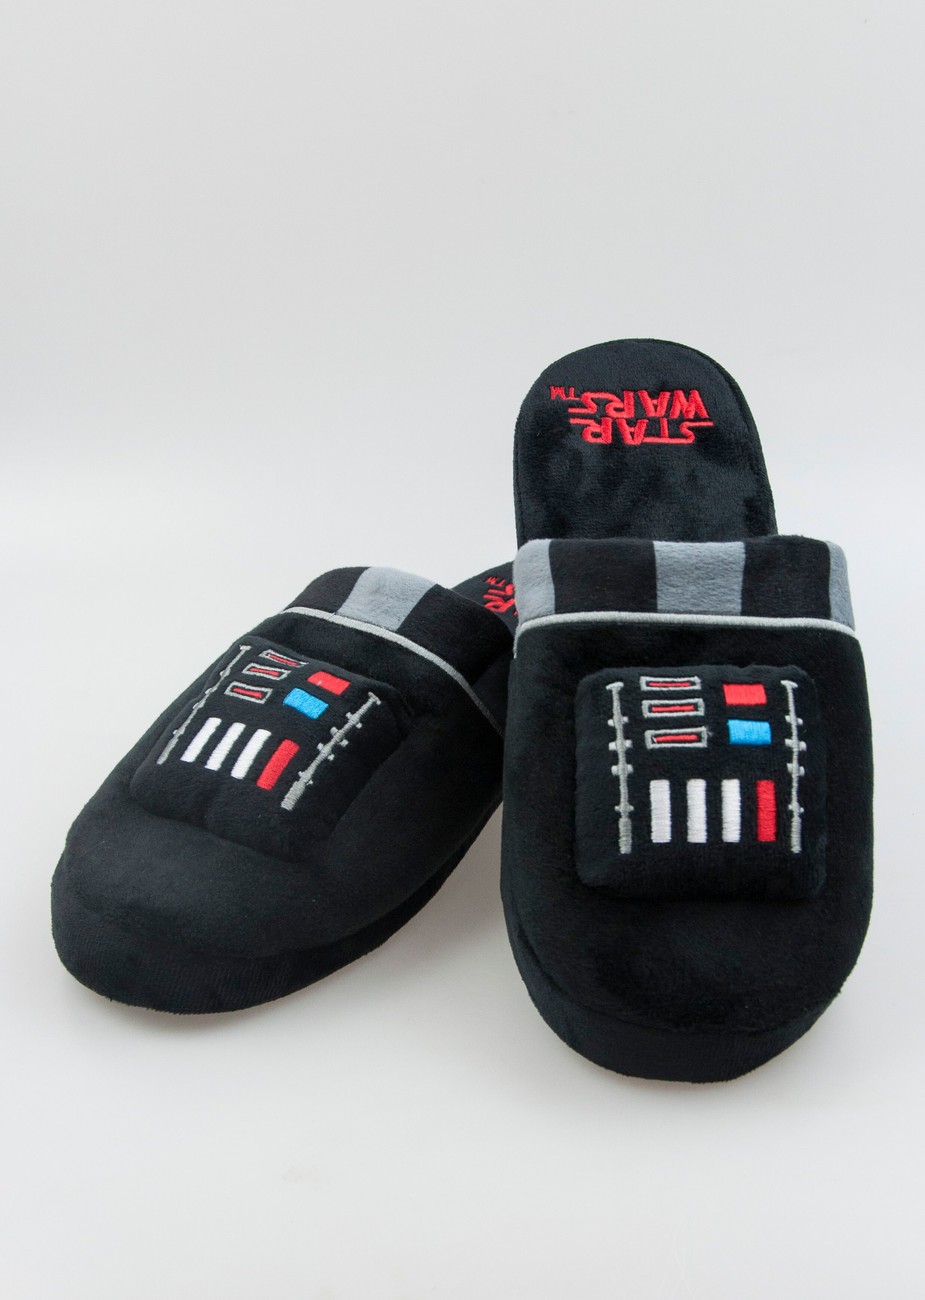 Pantoffels Wars - Darth Vader | Kleding en accessoires van